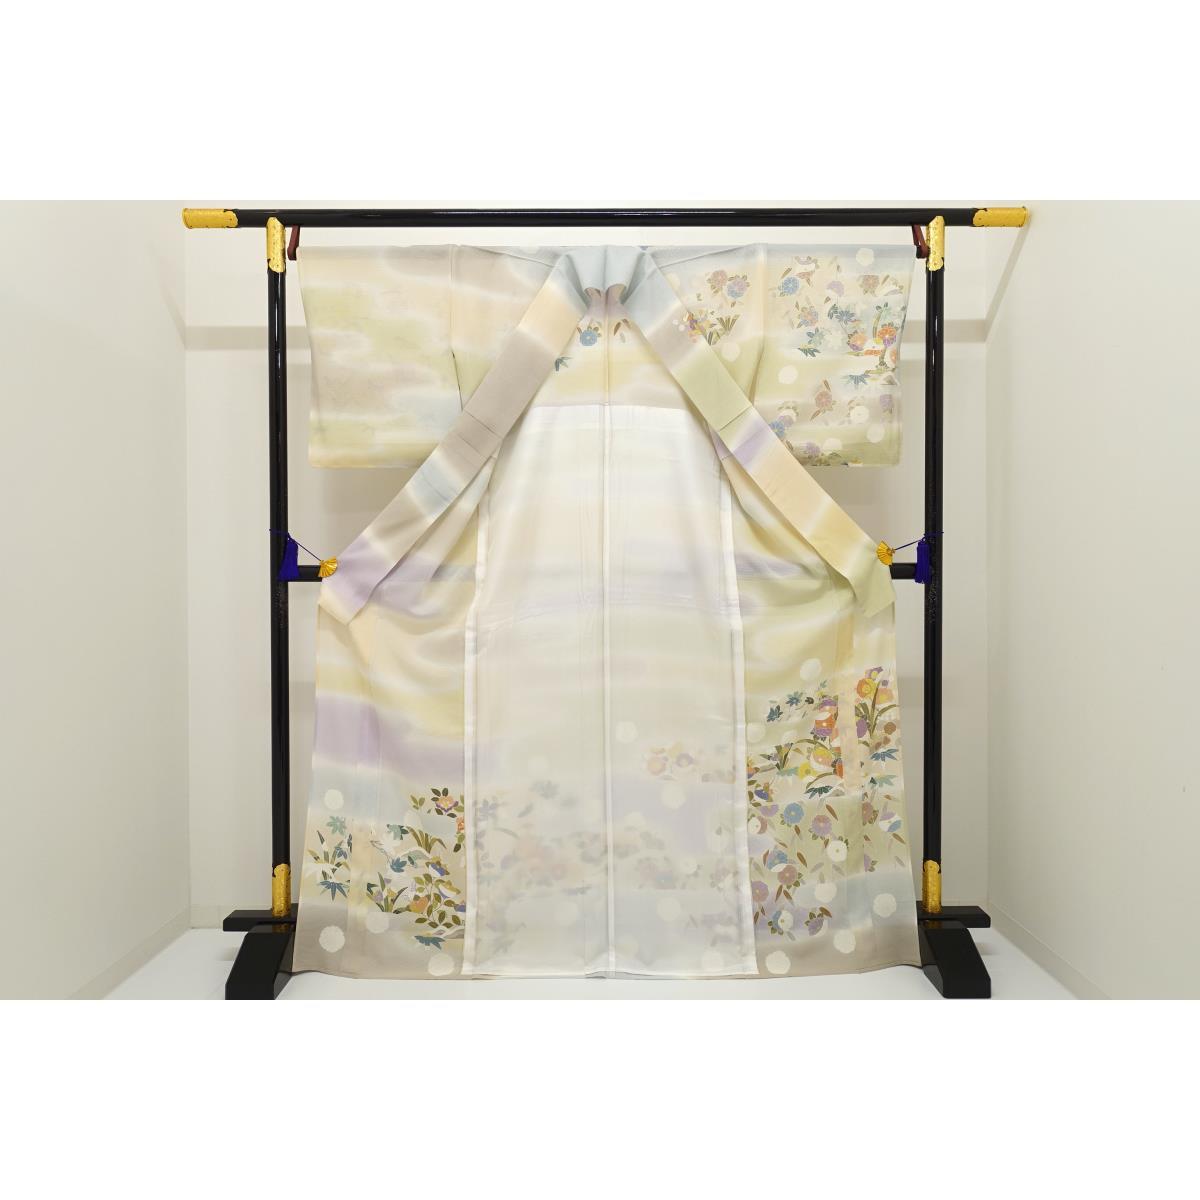 [Unused items] Single robe, Komagaro homongi, Yuzen gold color processing, blurred dyeing